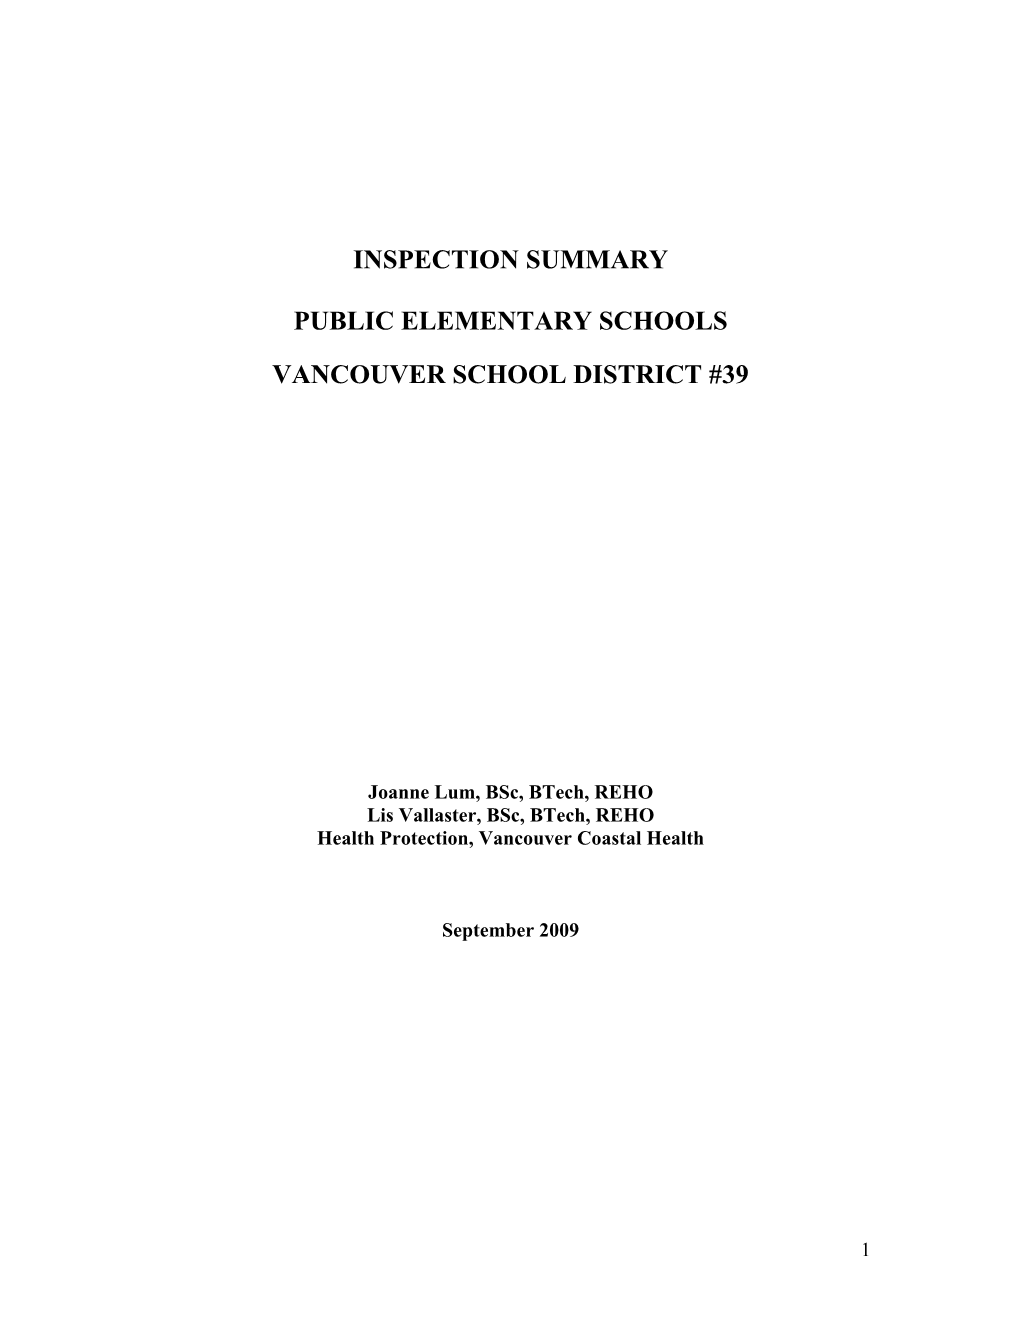 Inspection Summary Public Elementary Schools